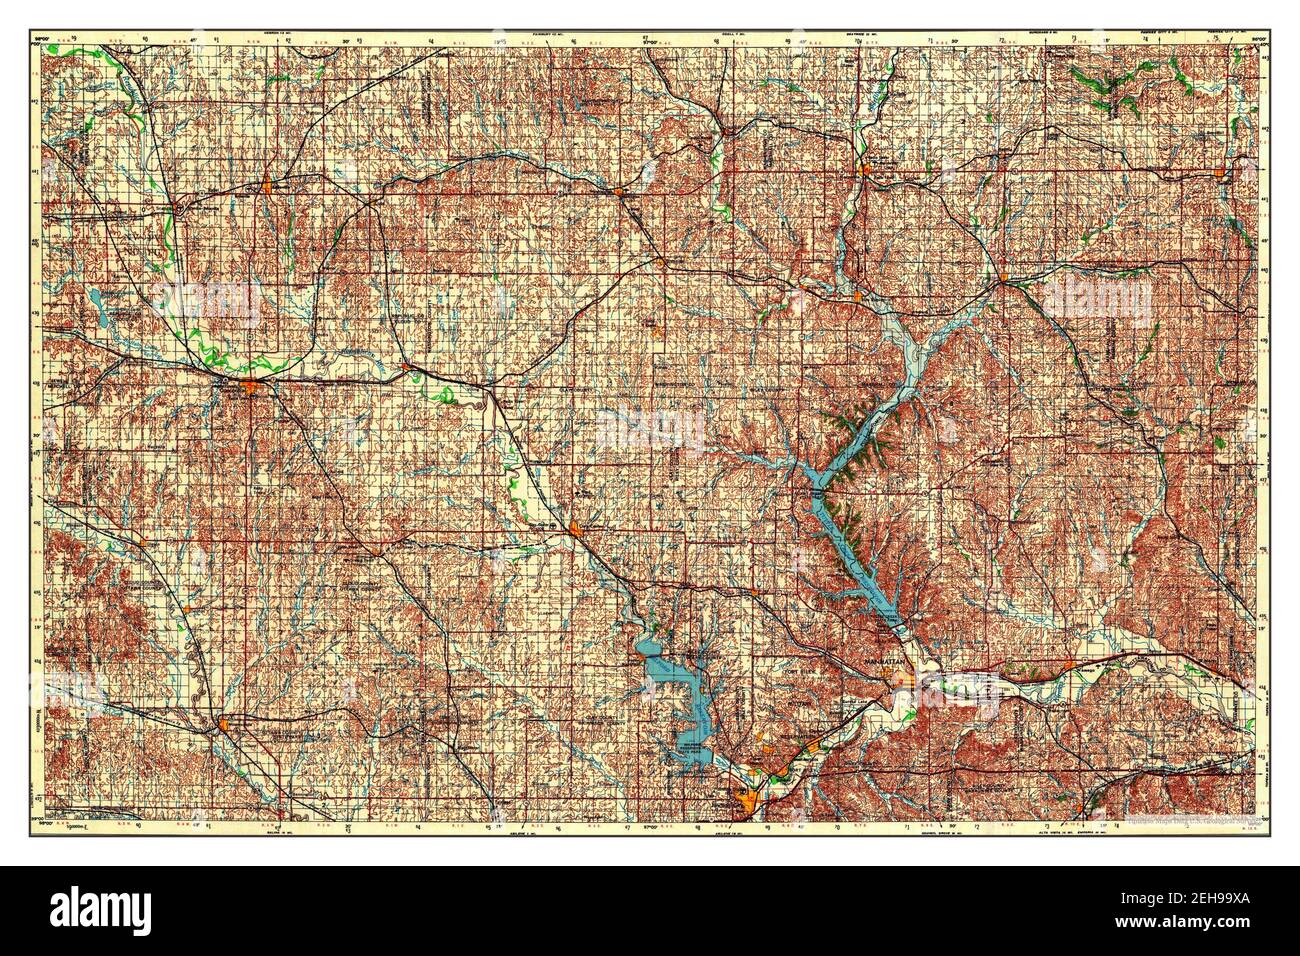 Manhattan Kansas Map 1955 1250000 United States Of America By Timeless Maps Data Us Geological Survey 2EH99XA 